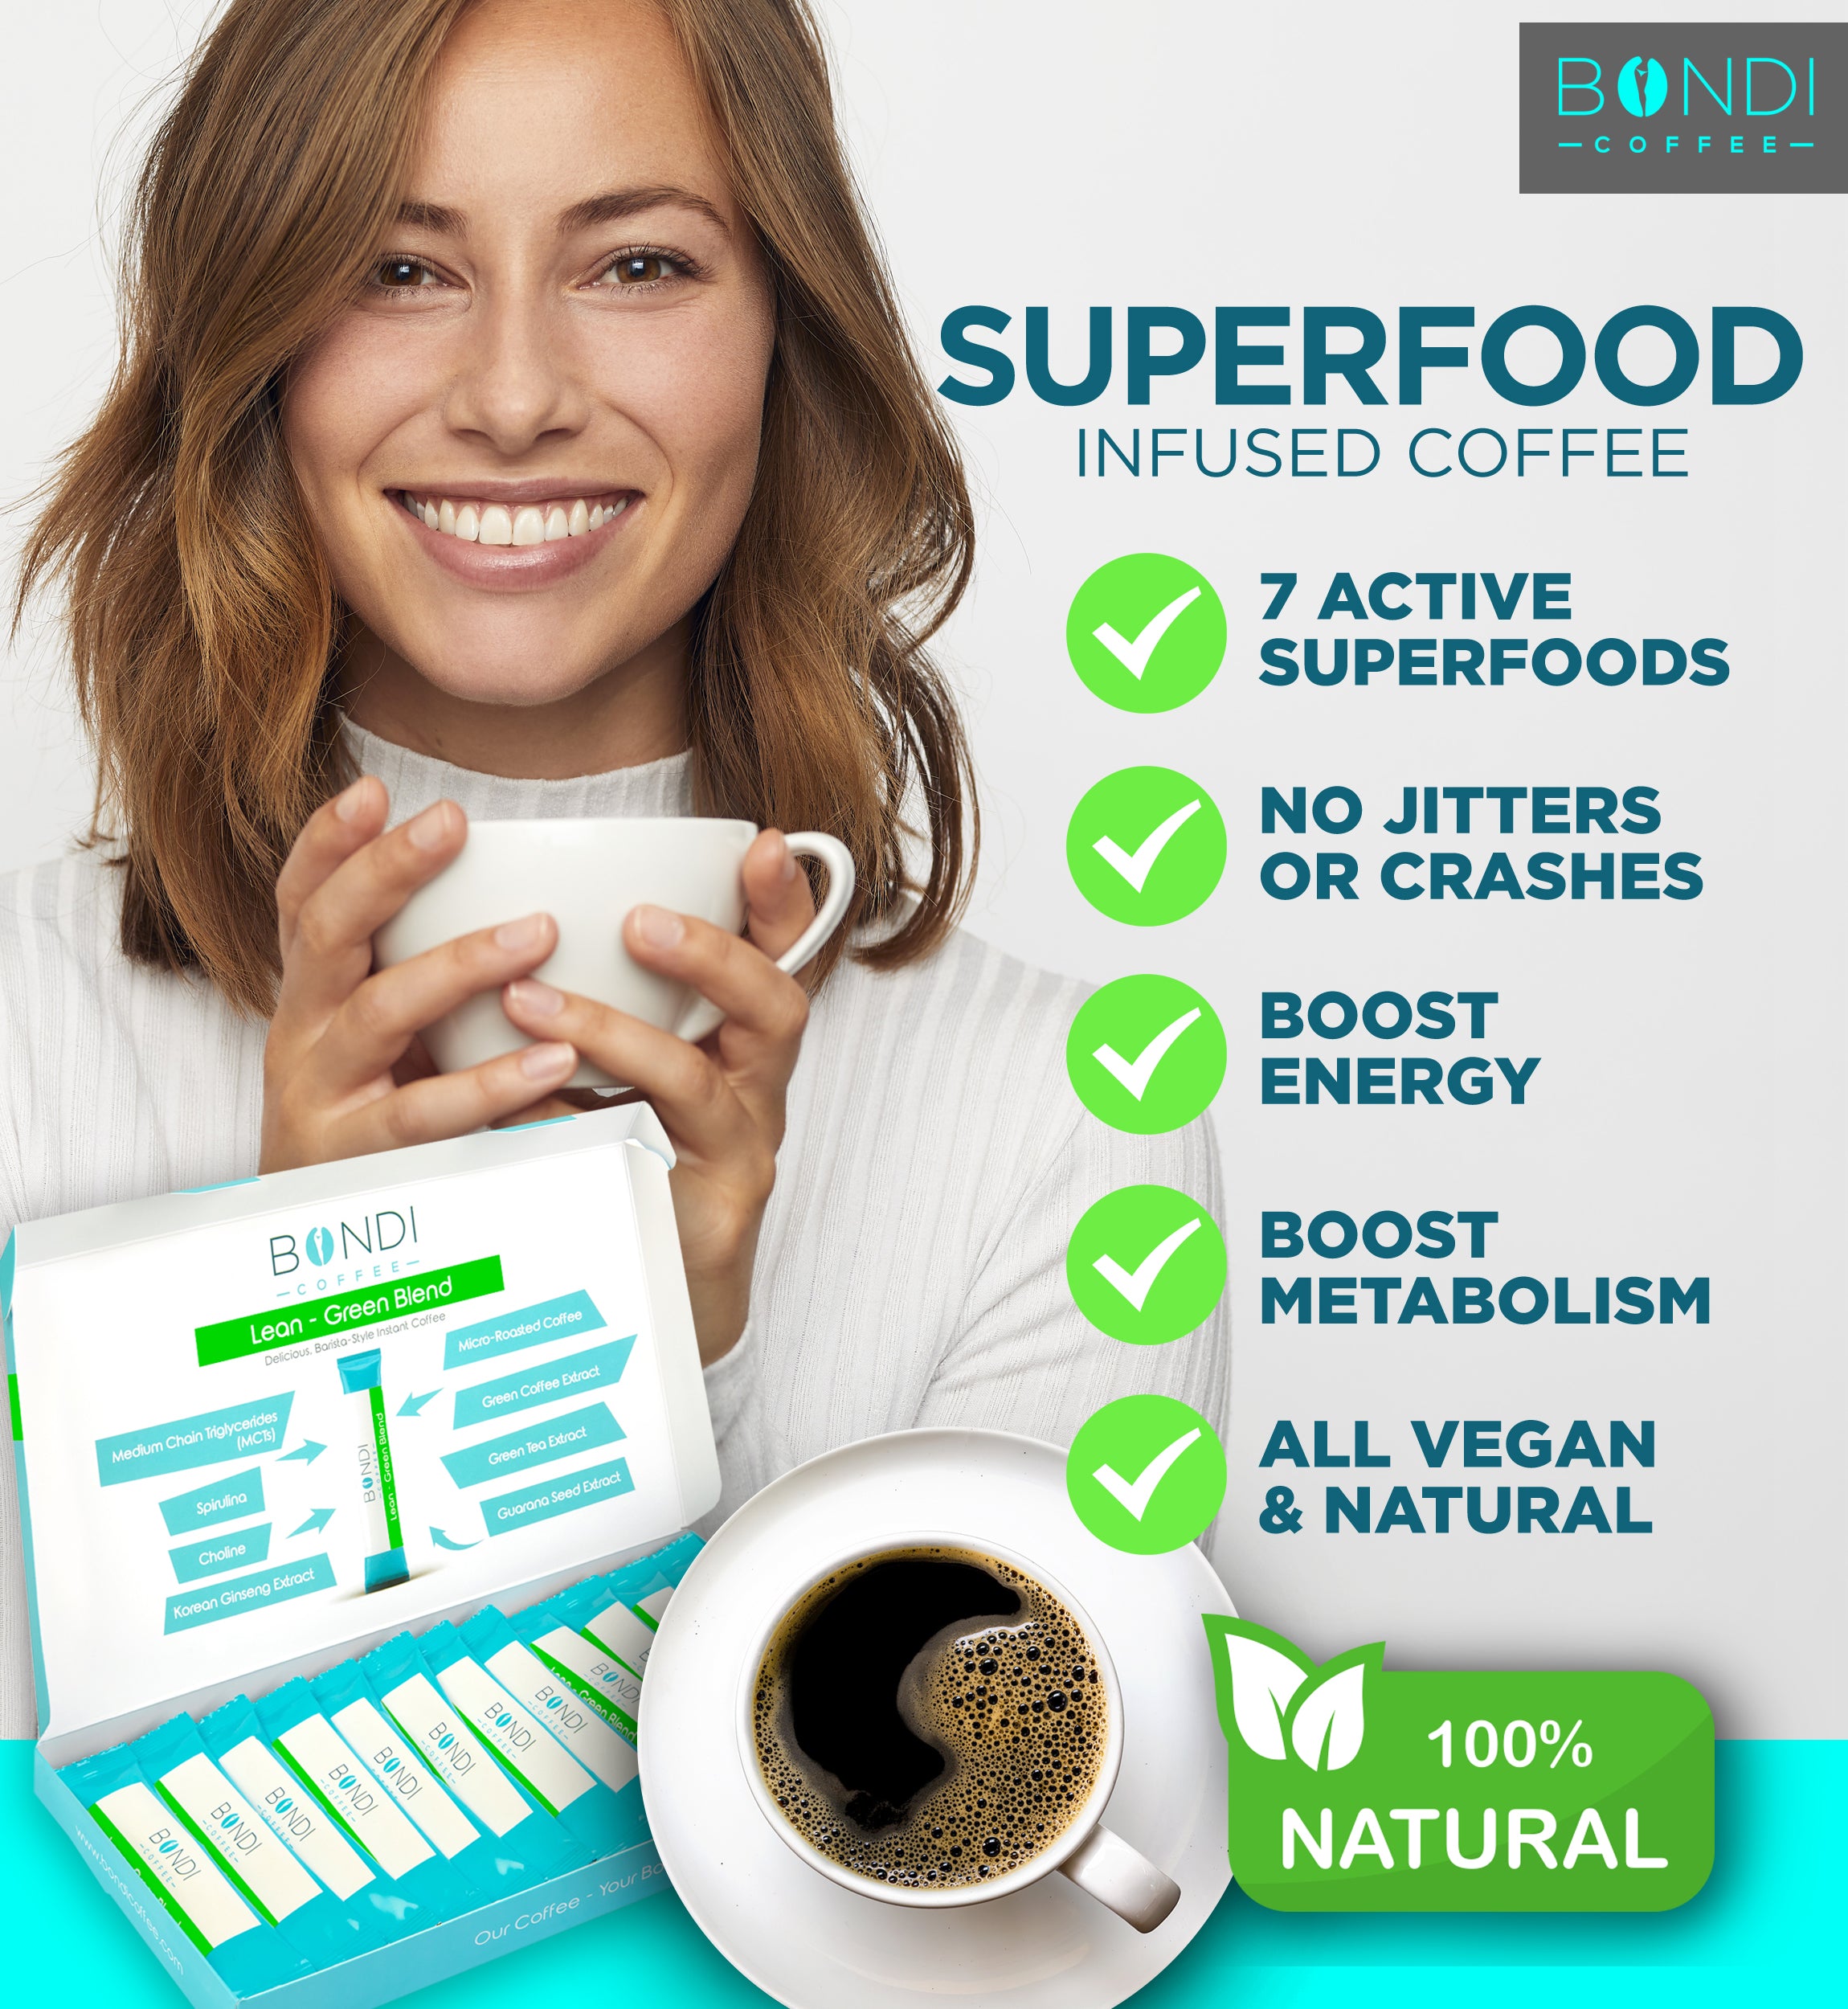 Lean-Green Superfood Coffee